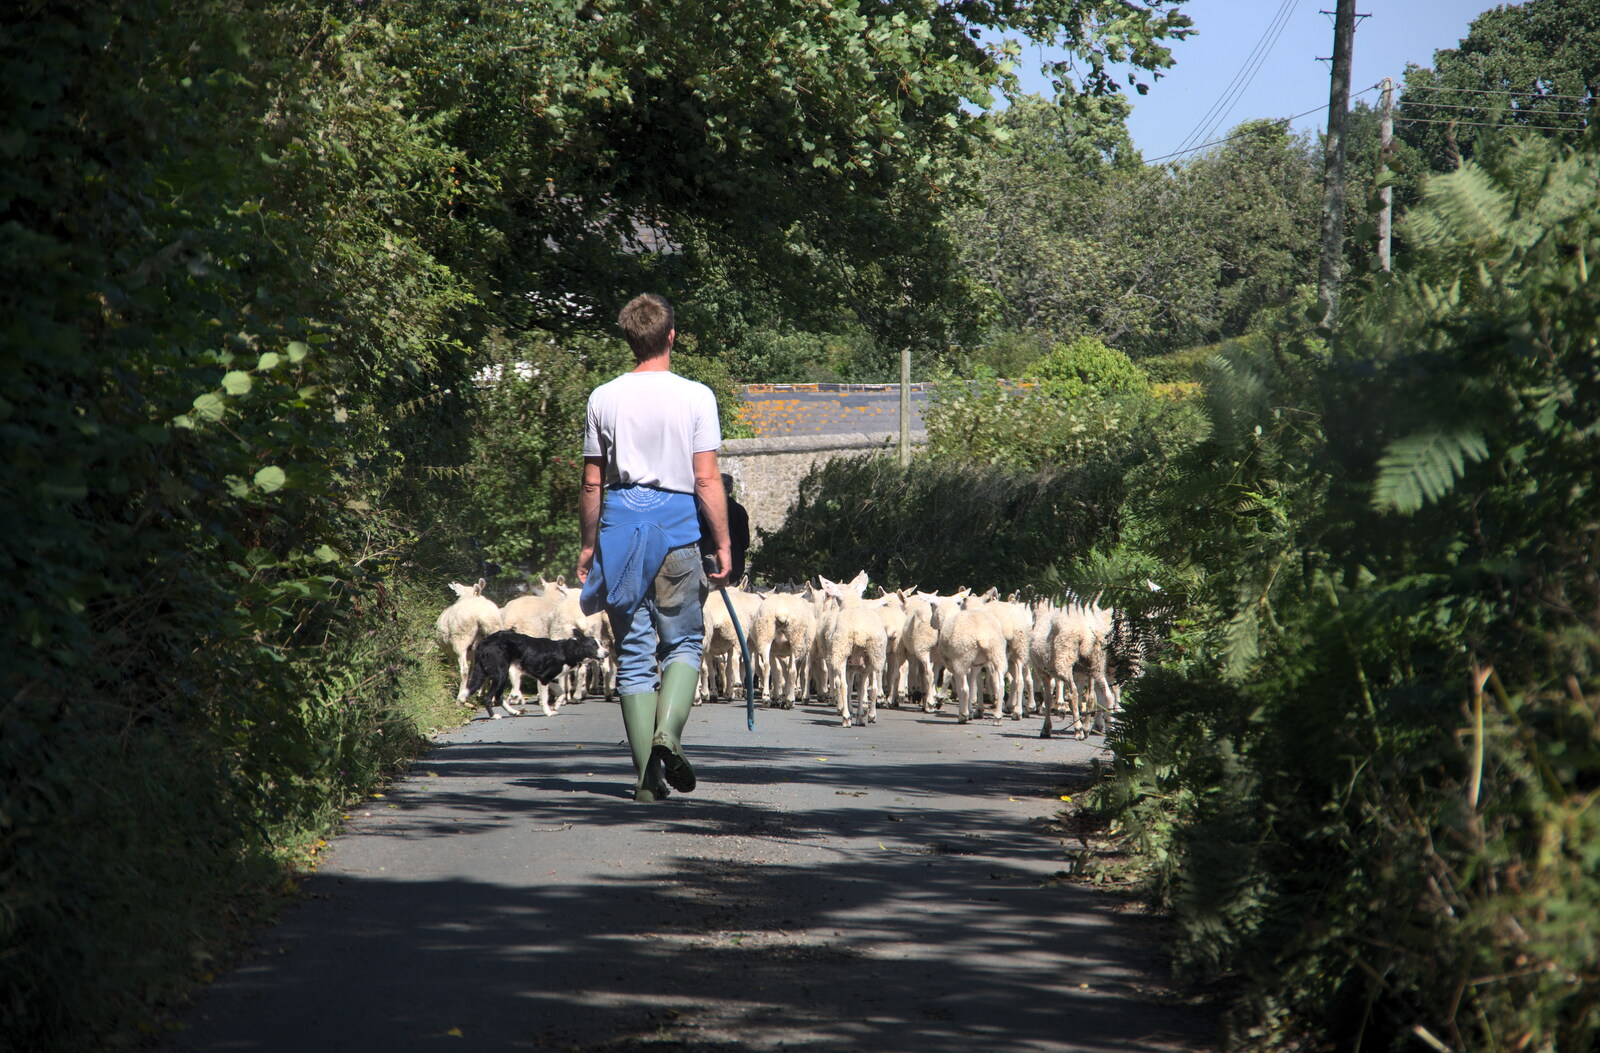 A traditional Devon traffic jam, with sheep from A Walk up Hound Tor, Dartmoor, Devon - 24th August 2020